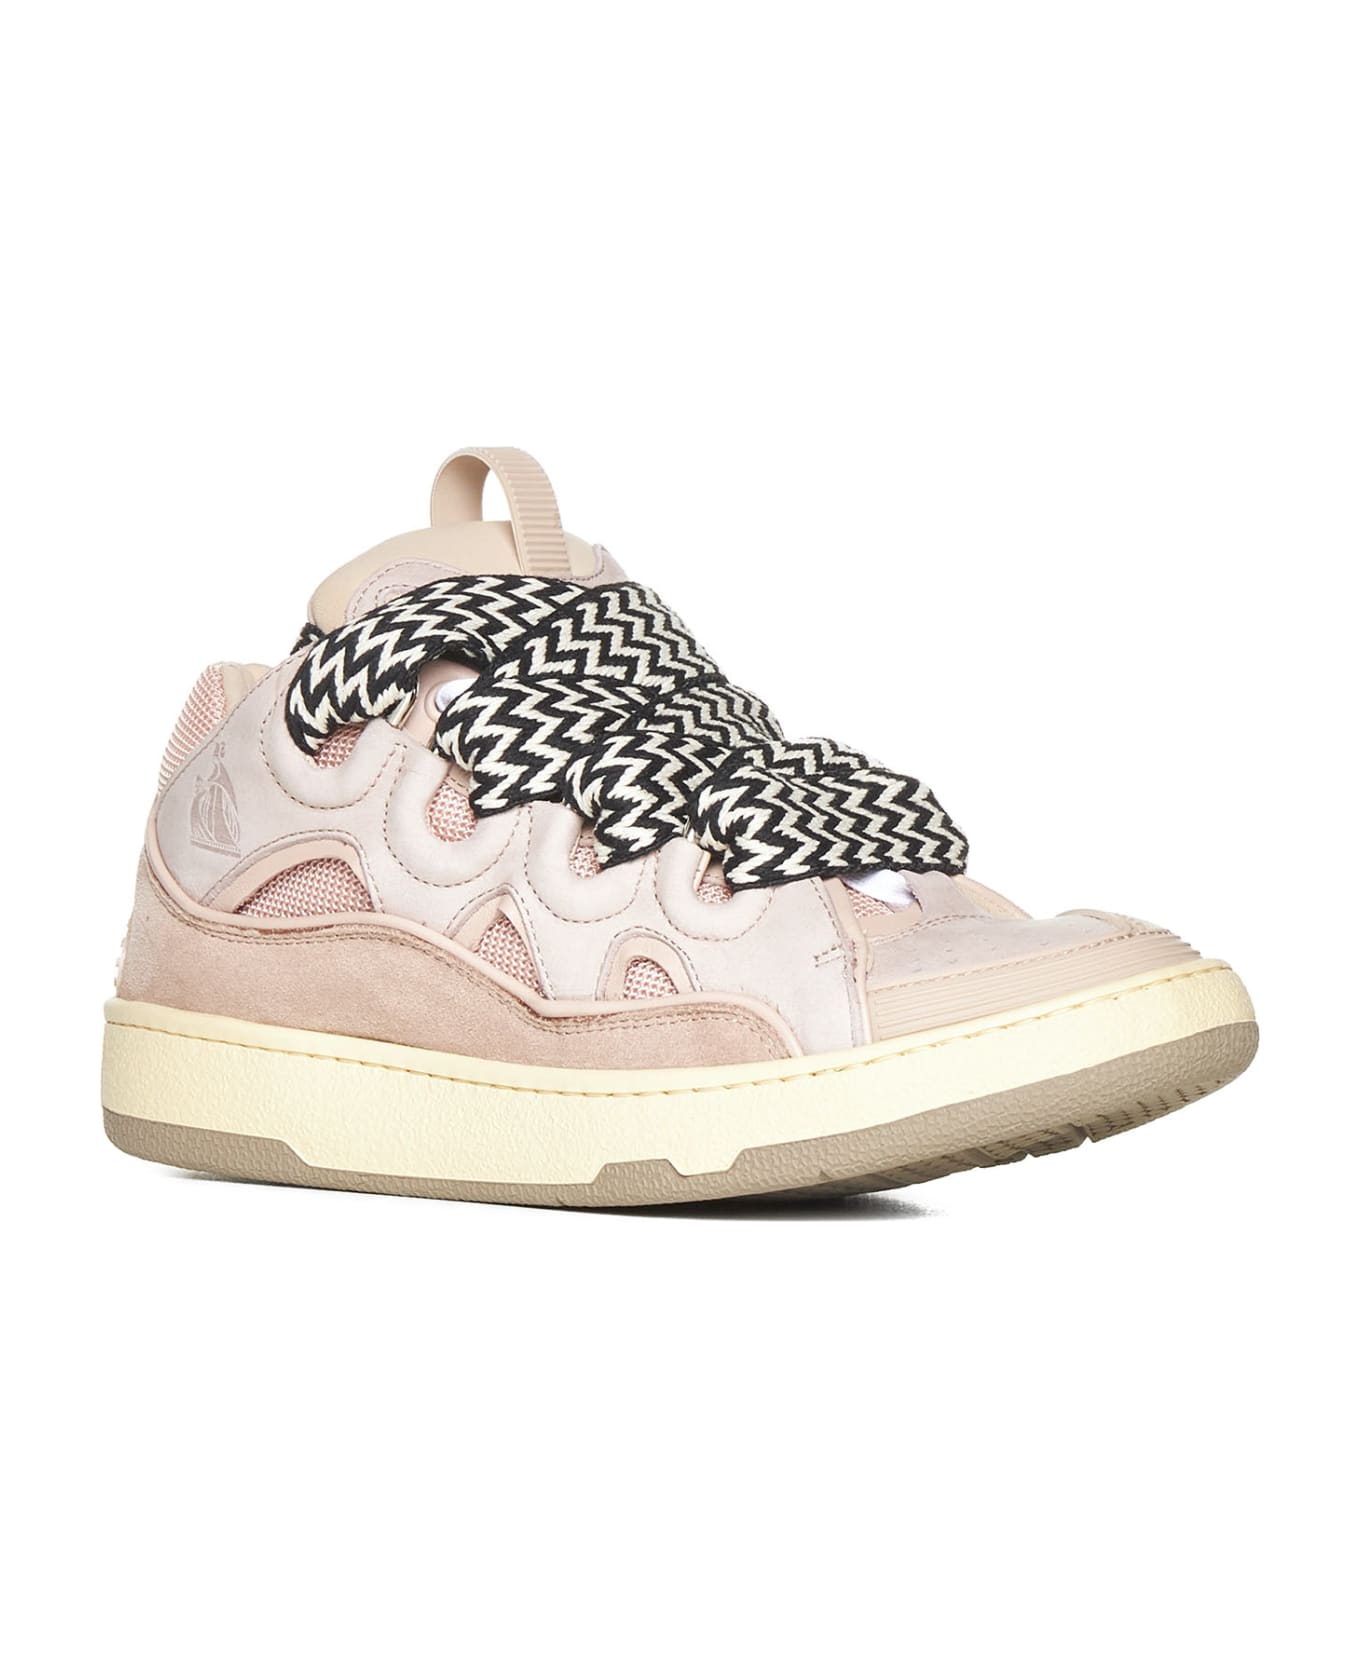 Lanvin Sneakers - Pale pink スニーカー